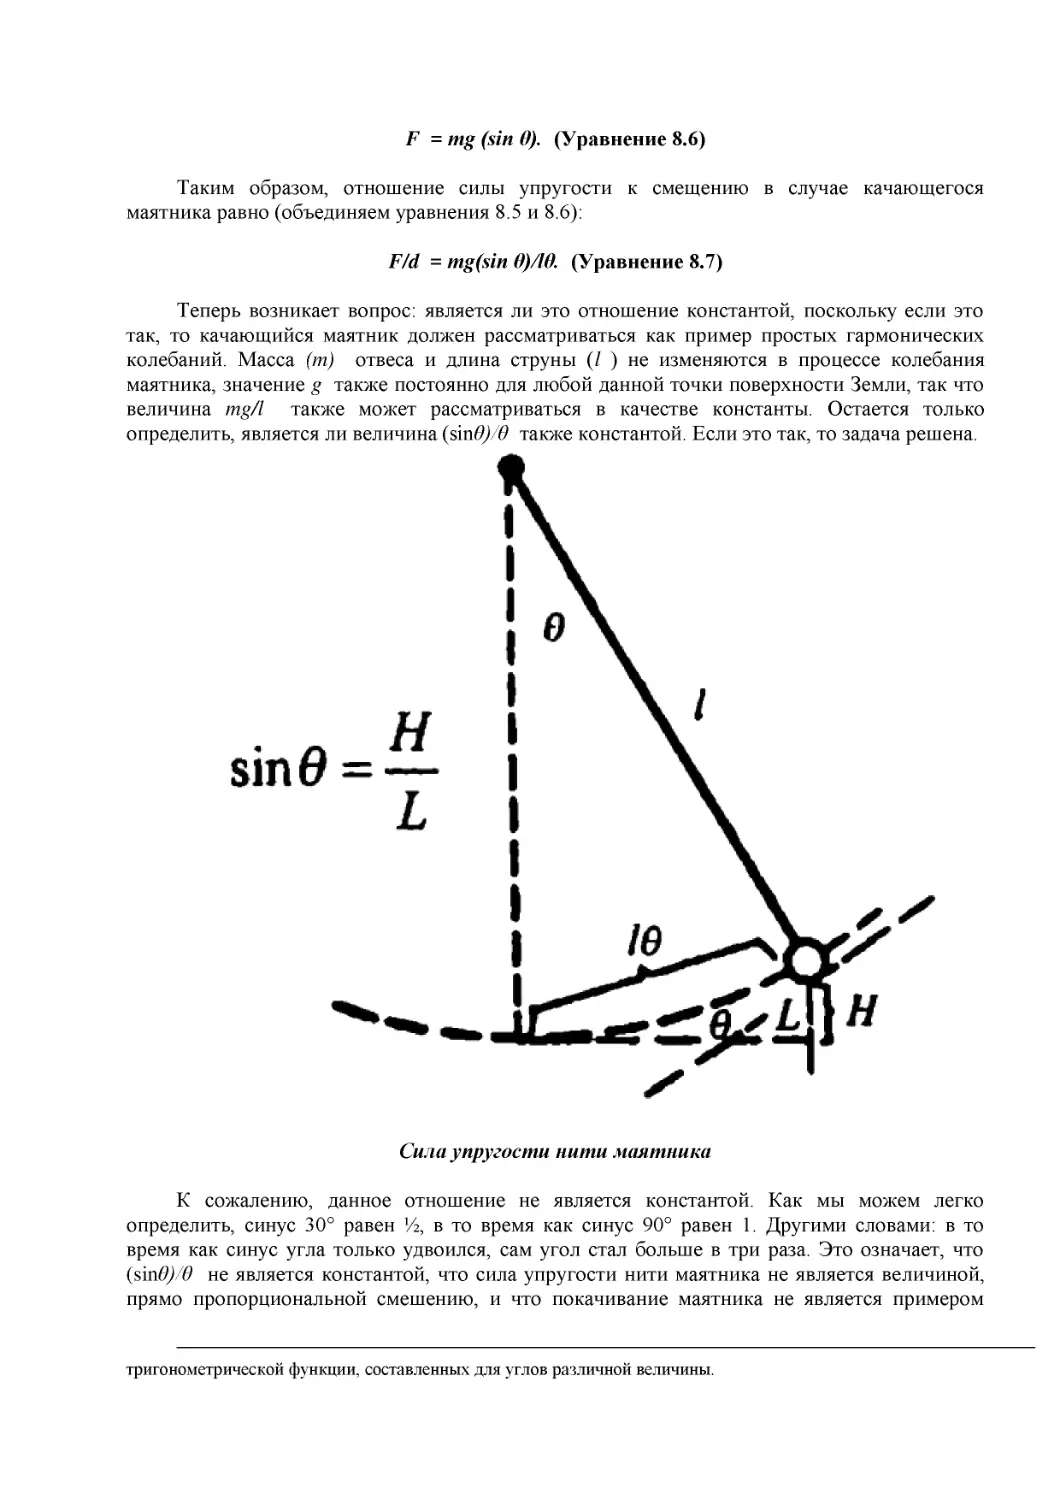 F  = mg (sin θ).  (Уравнение 8.6)
F/d  = mg(sin θ)/lθ.  (Уравнение 8.7)
Сила упругости нити маятника